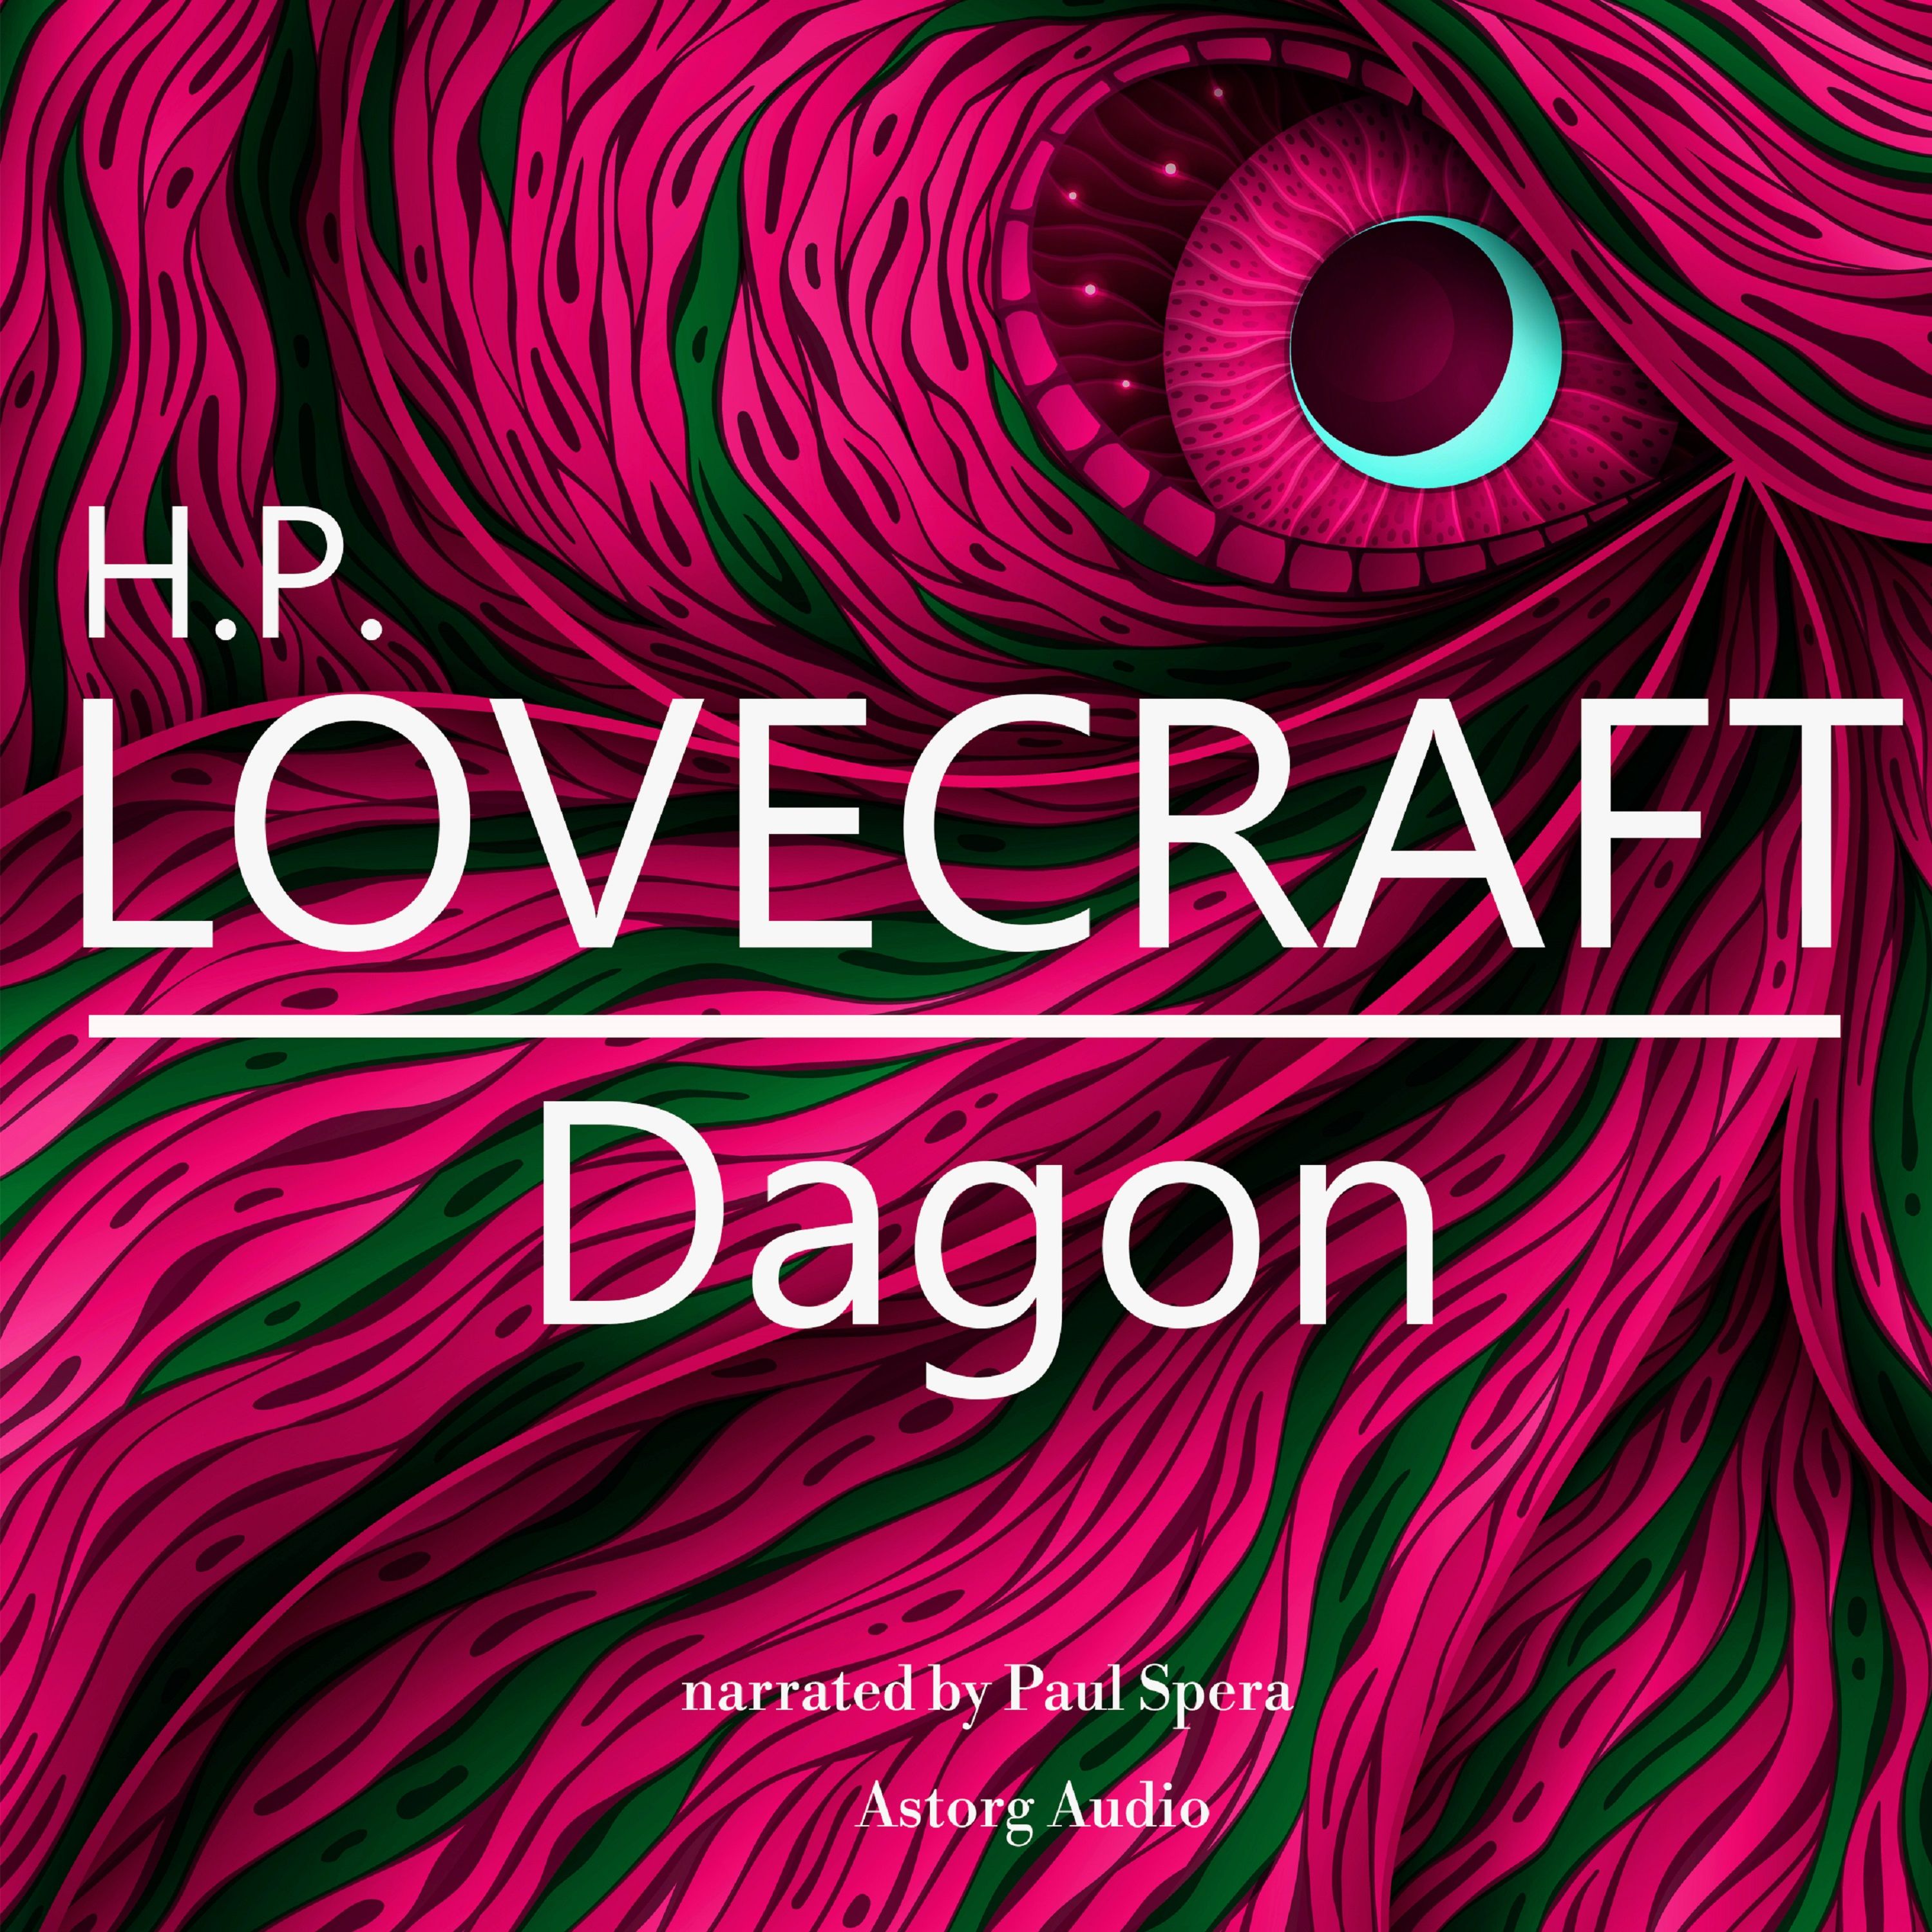 H. P. Lovecraft : Dagon, lydbog af H. P. Lovecraft